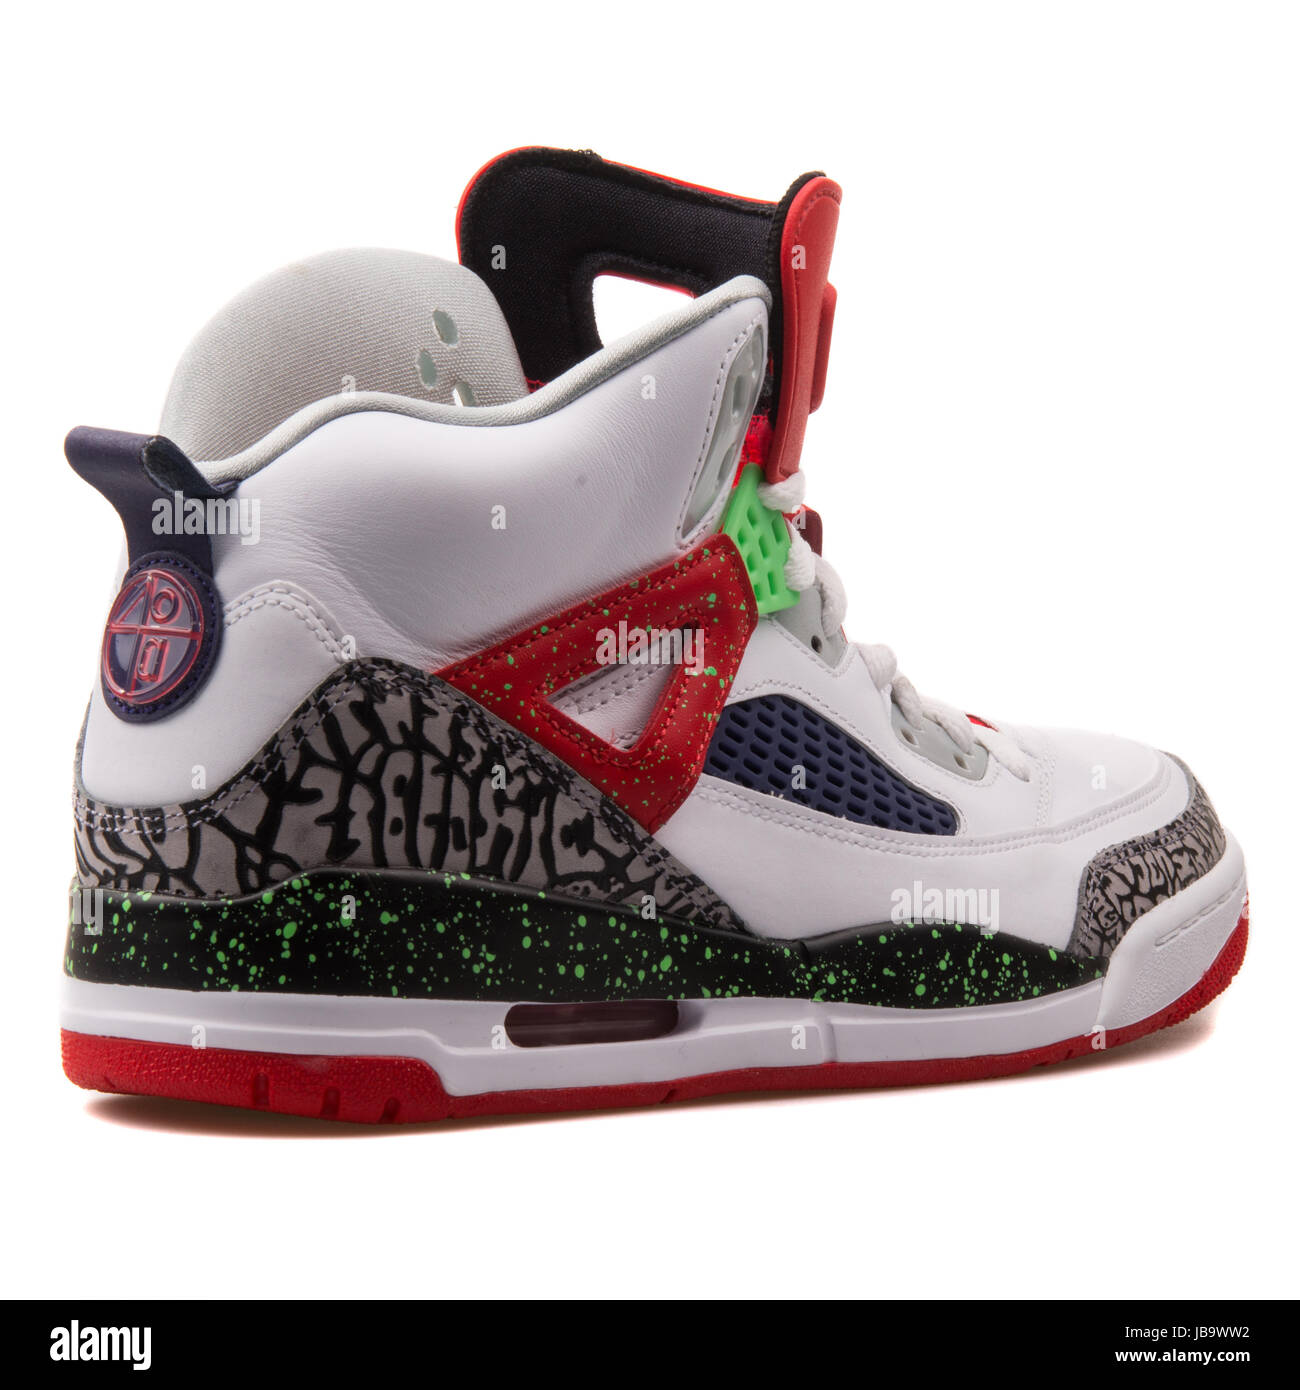 Nike Jordan Spizike weiß, schwarz, rot und Neon grün Herren Basketball- Schuhe - 315371-132 Stockfotografie - Alamy